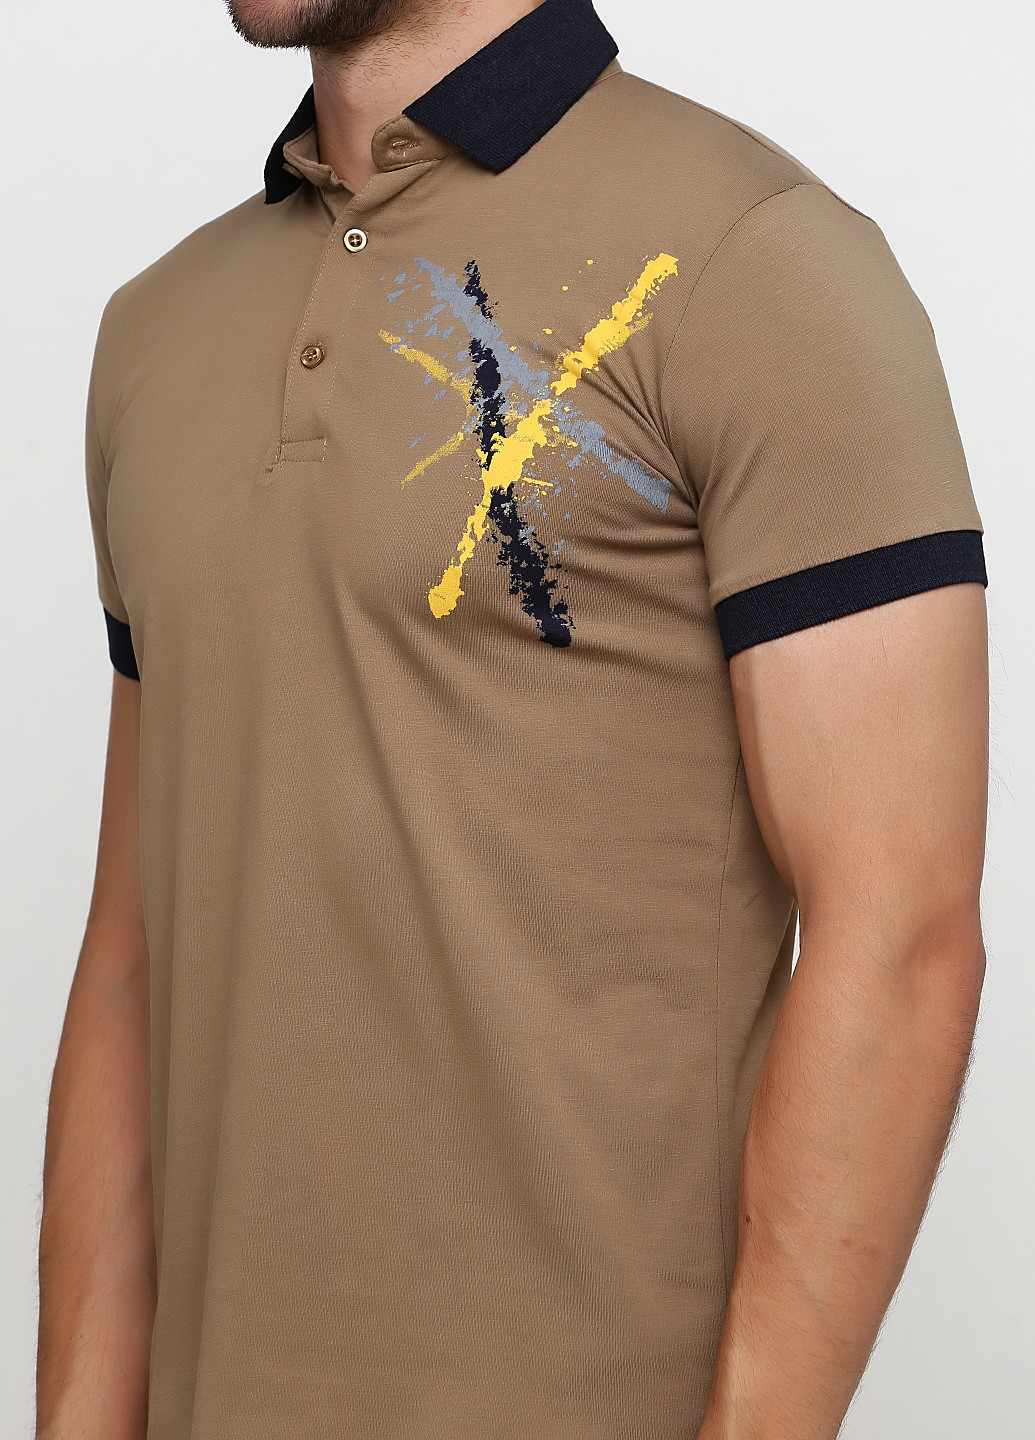 Коричневая футболка-поло для мужчин Golf с рисунком